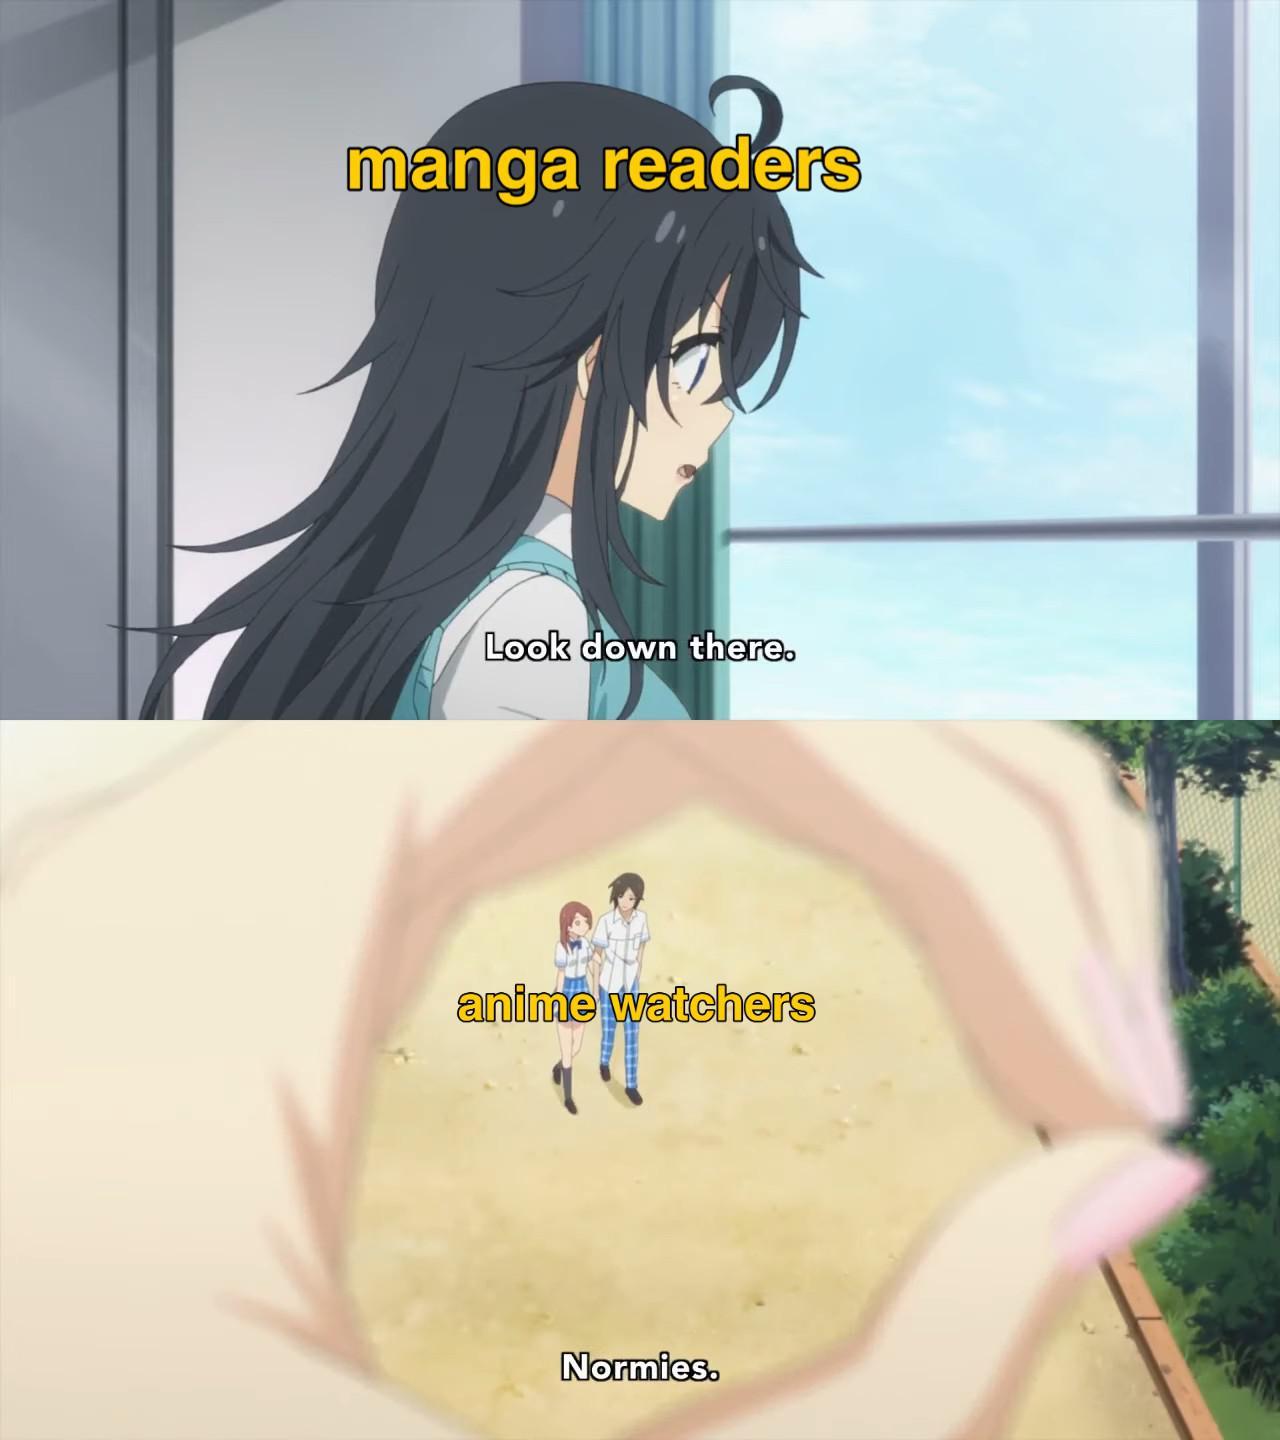 Manga gang rise - meme